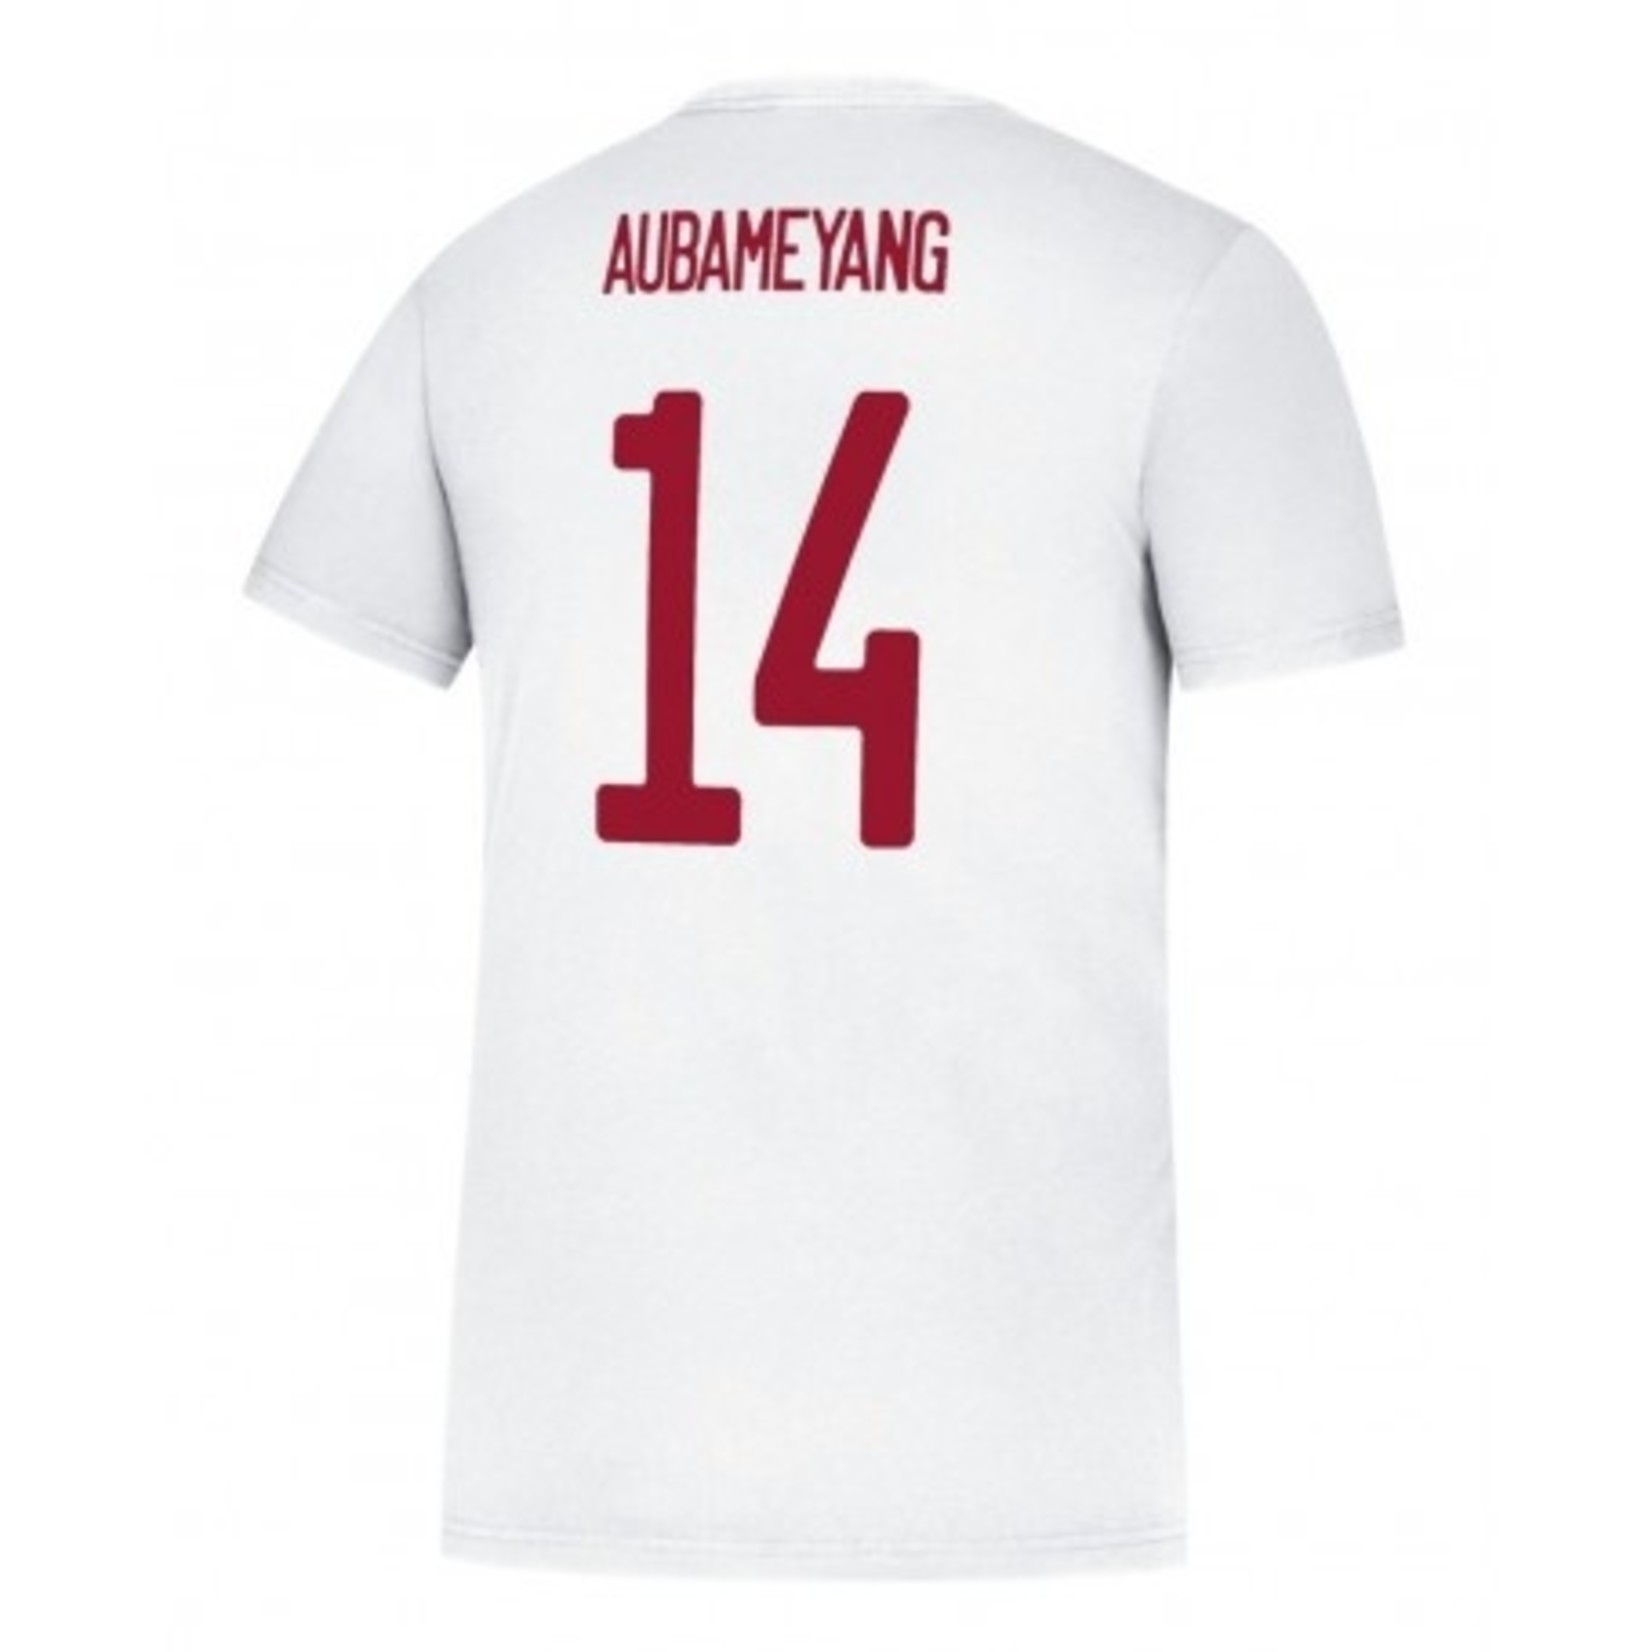 Adidas Arsenal T-Shirt - Aubameyang